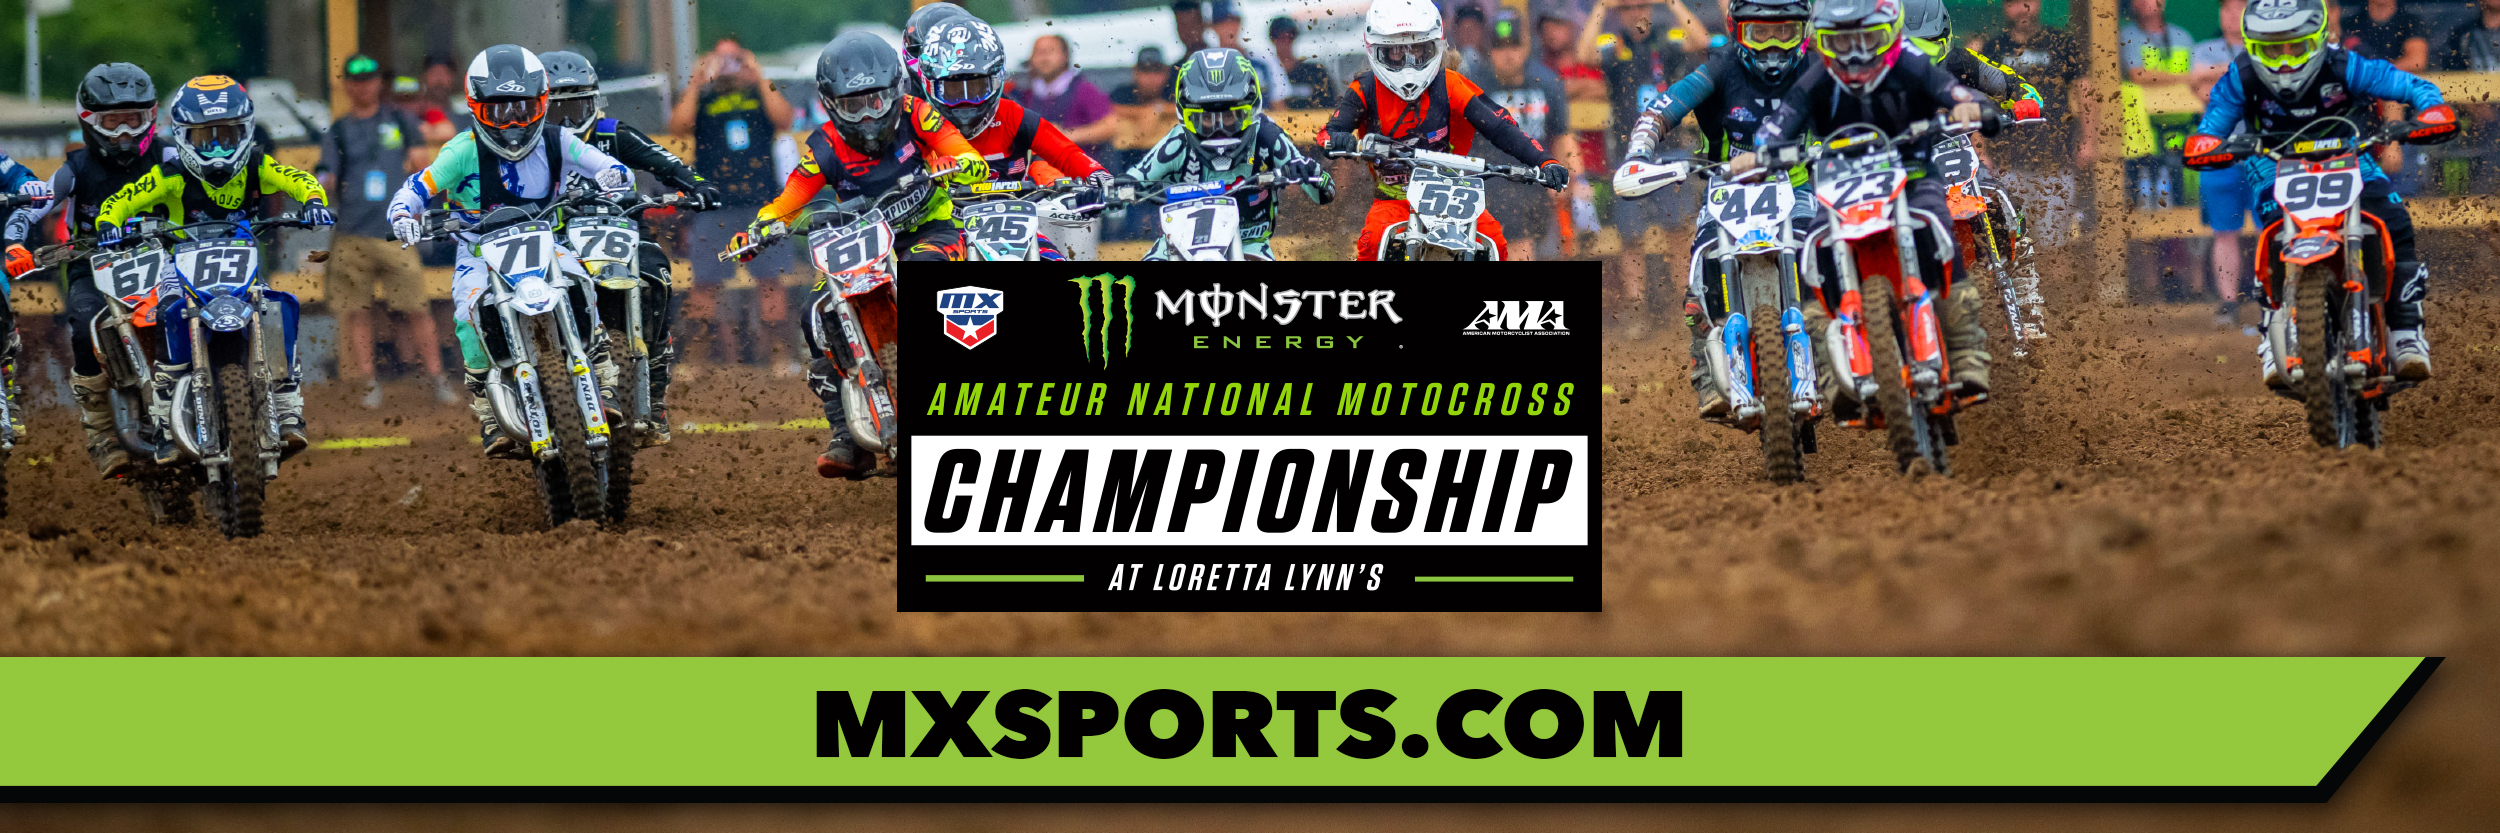 2023 Amateur National Motocross Championship banner